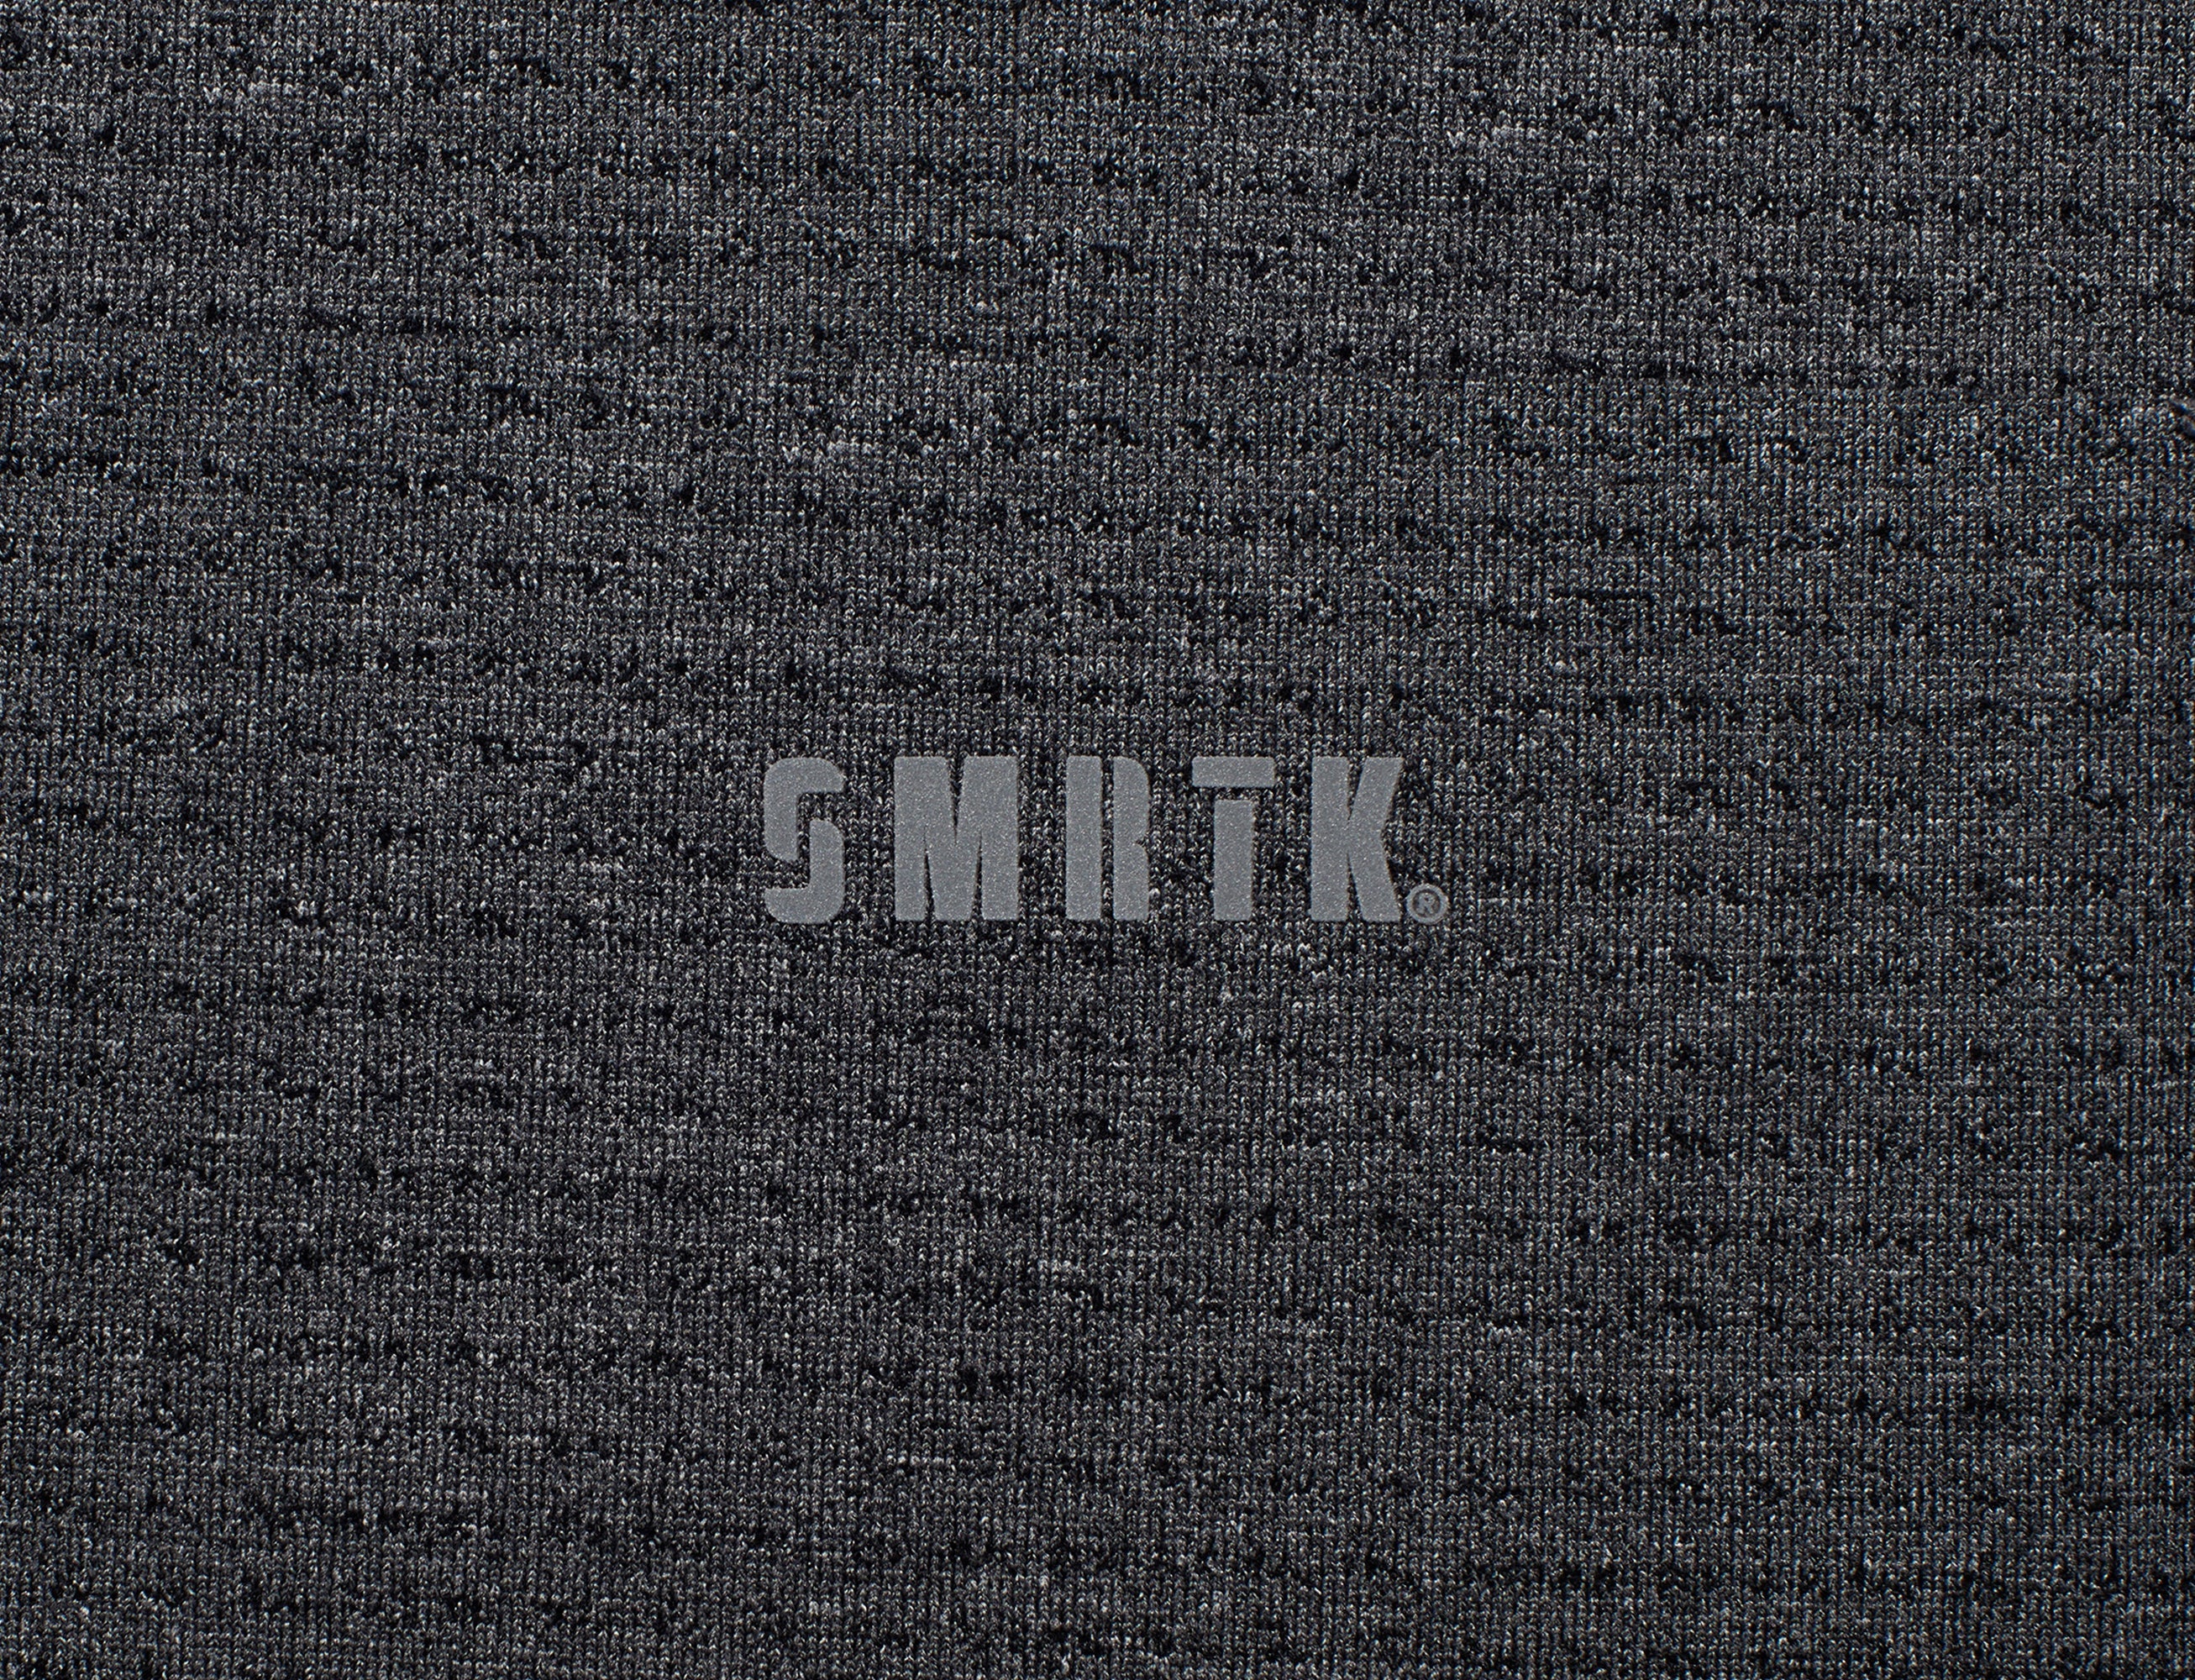 SMRTK Short Sleeve Performance Tee (5 pack)